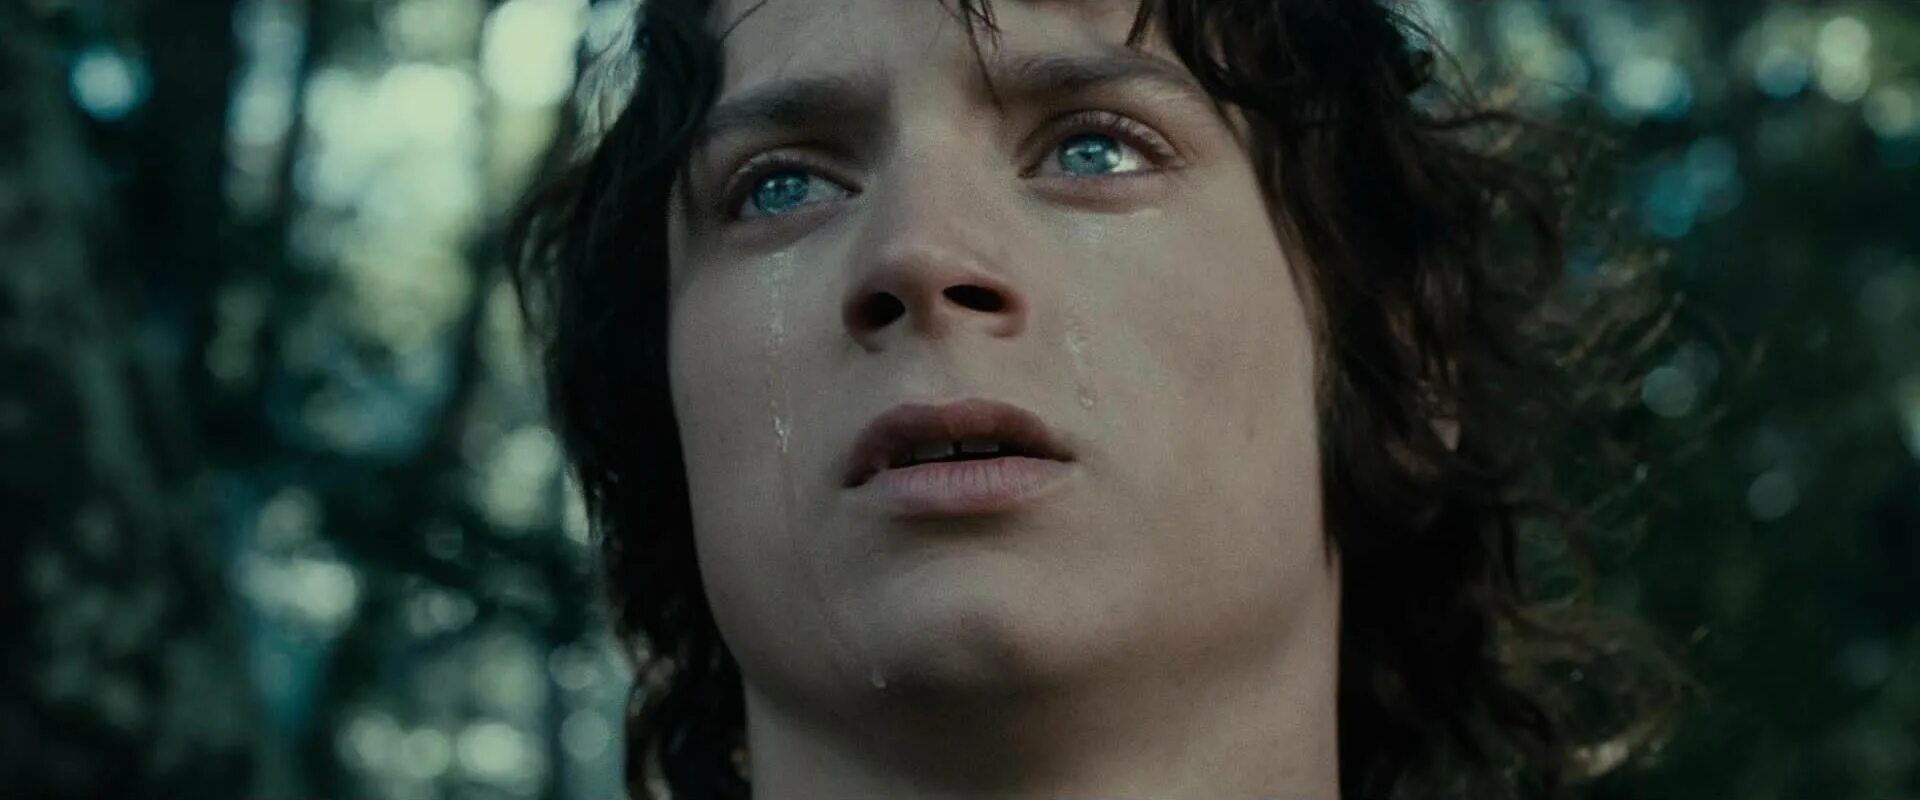 Элайджа Вуд Фродо. Фродо Бэггинс плачет. Элайджа Вуд Хоббит. Фродо грустный. Слушать колец 3